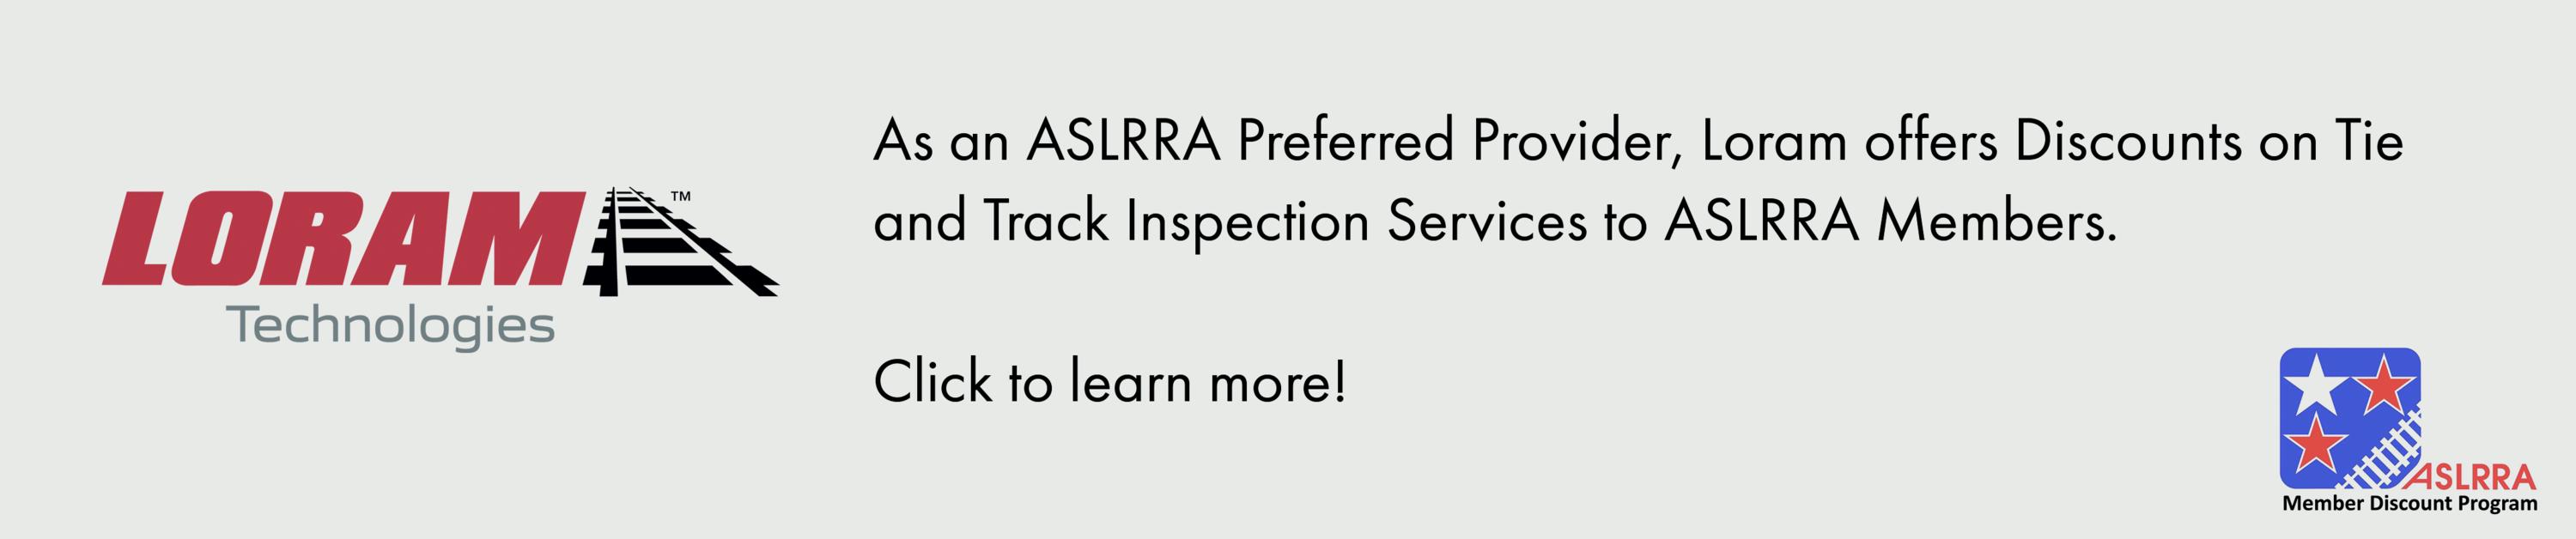 ASLRRA Loram Preferred Provider